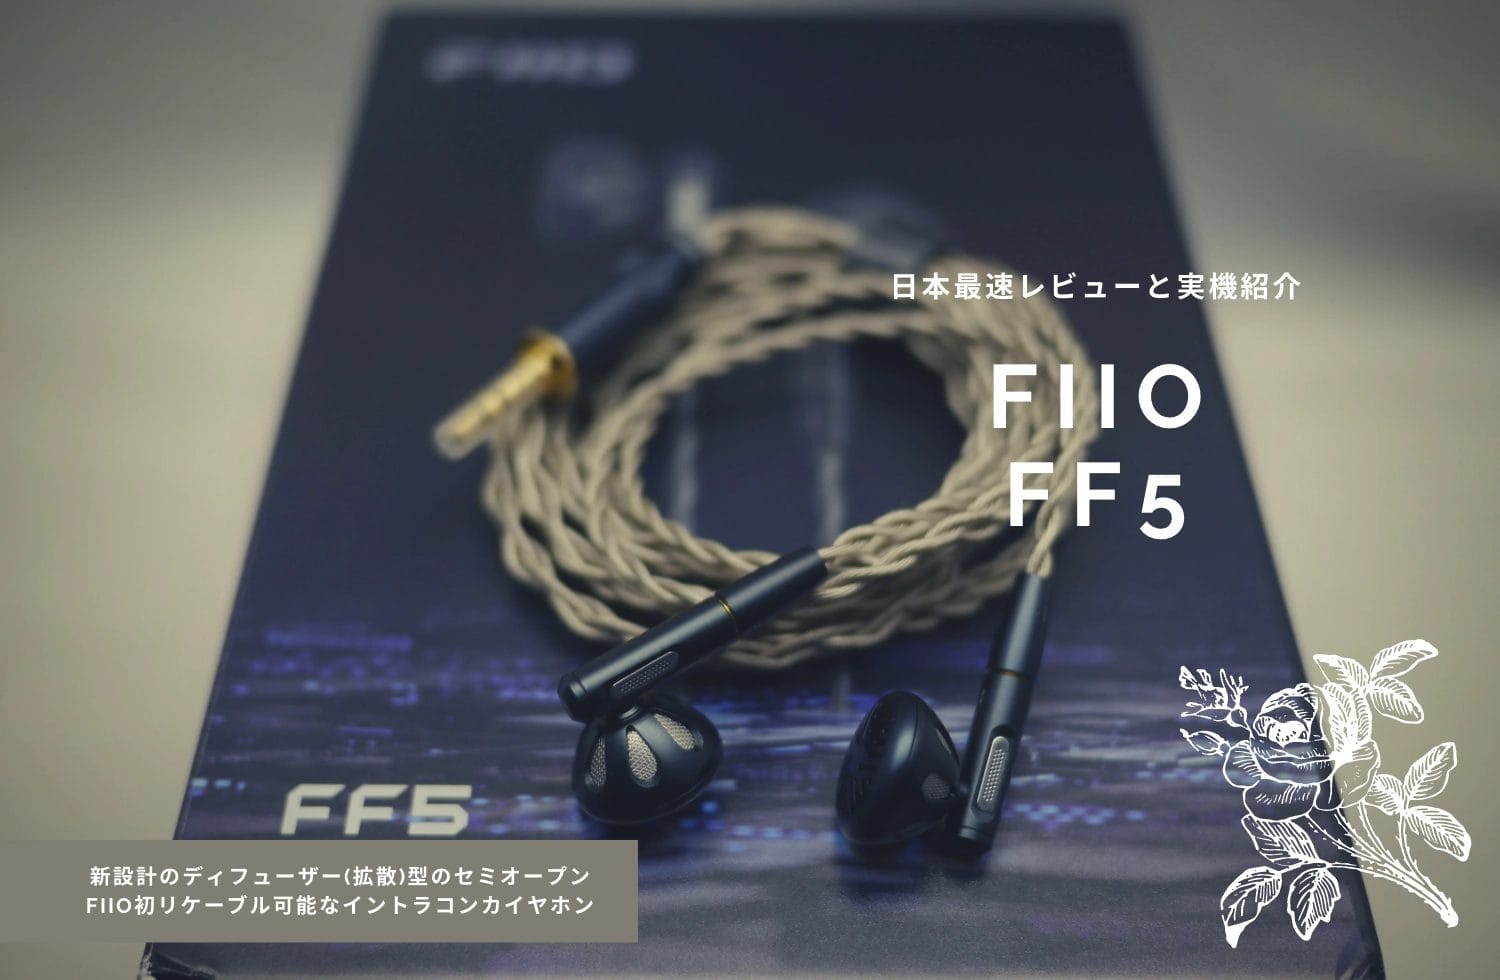 Fiio FF5 - www.thesims4.it